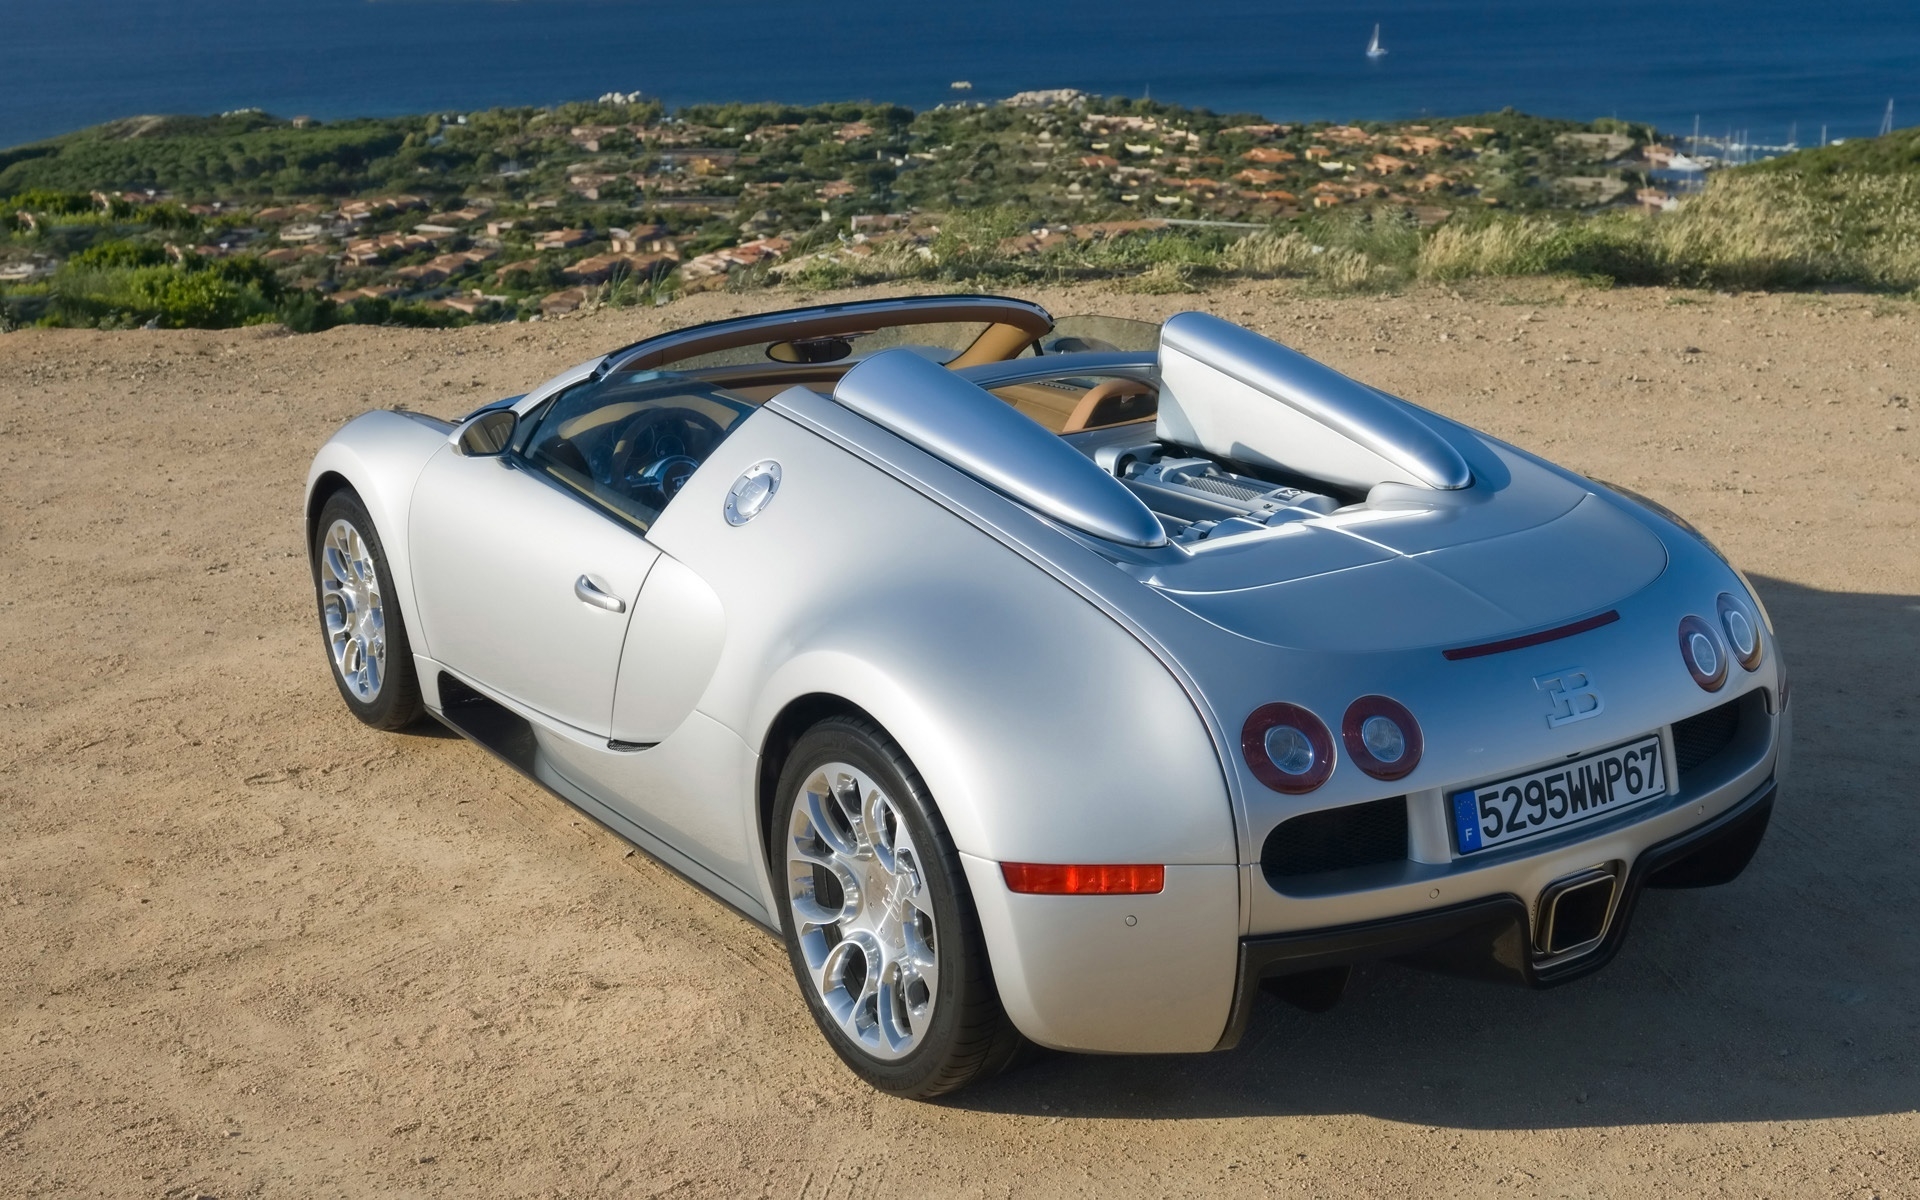 Bugatti Veyron 16.4 Grand Sport in Sardinia 2010 - Rear Angle for 1920 x 1200 widescreen resolution